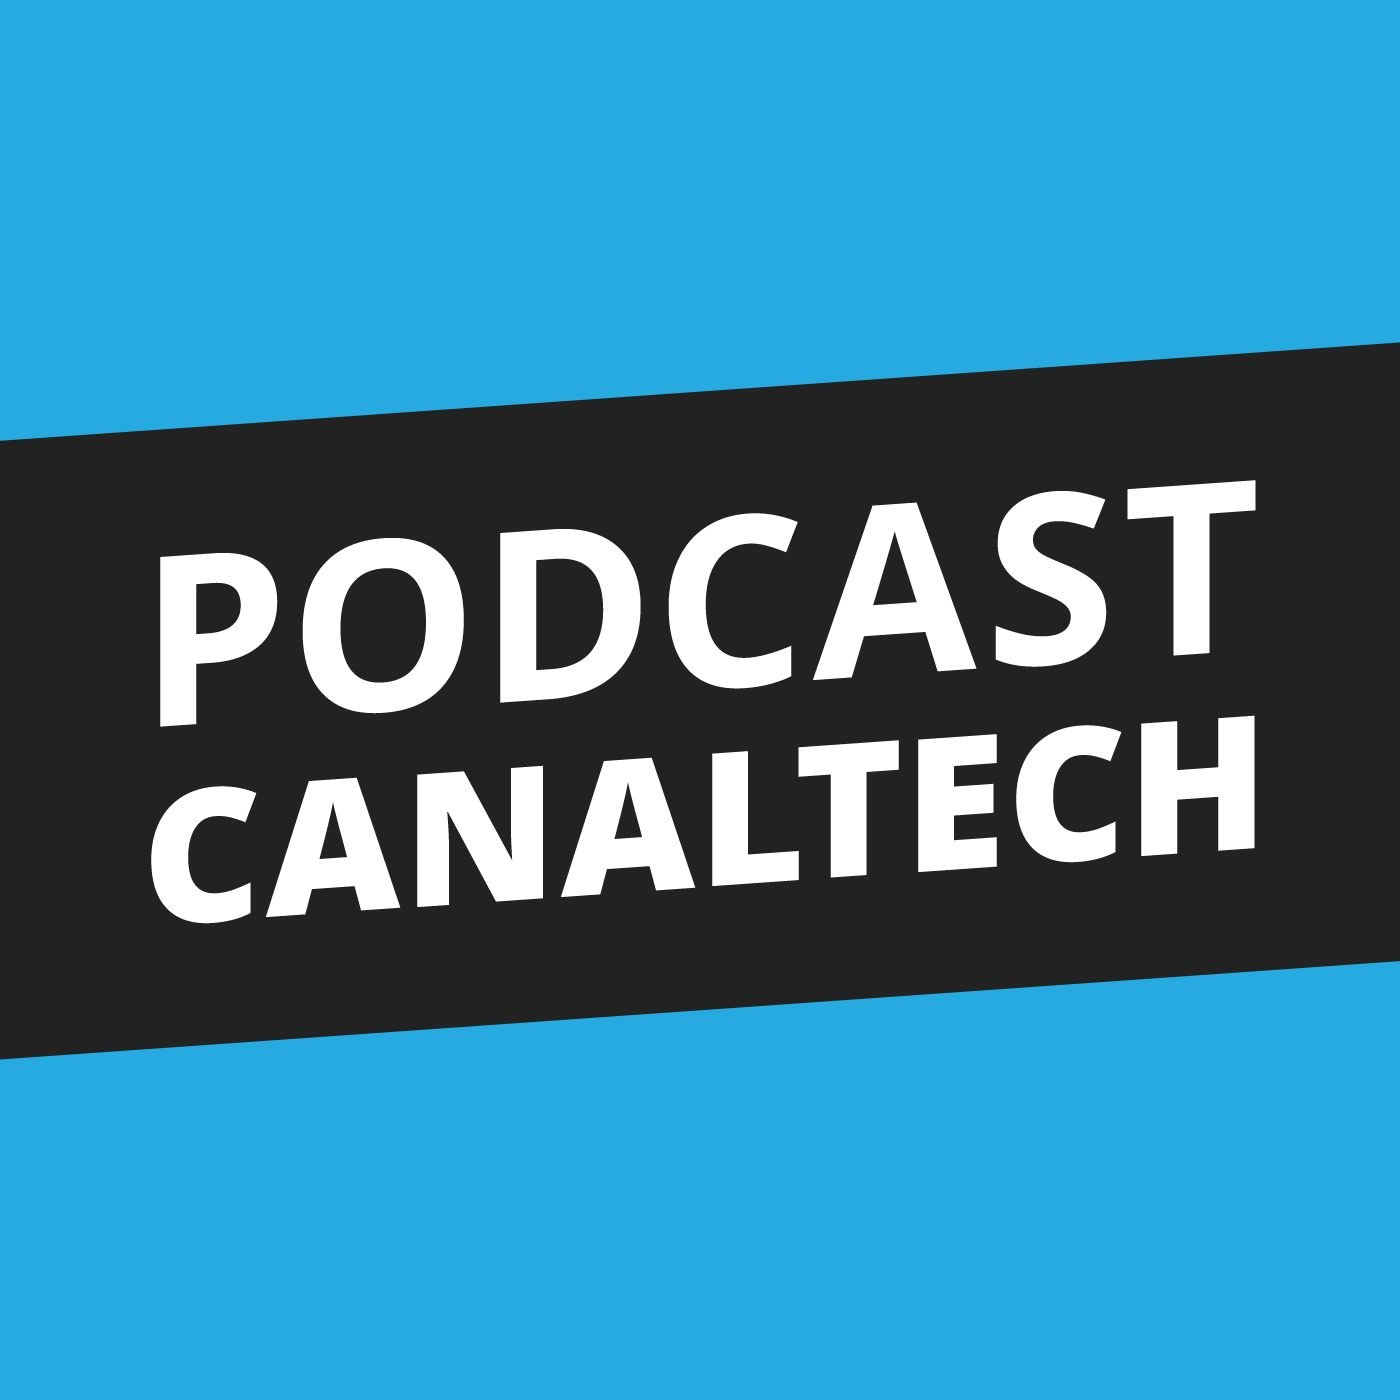 Podcast Canaltech - 15/05/14